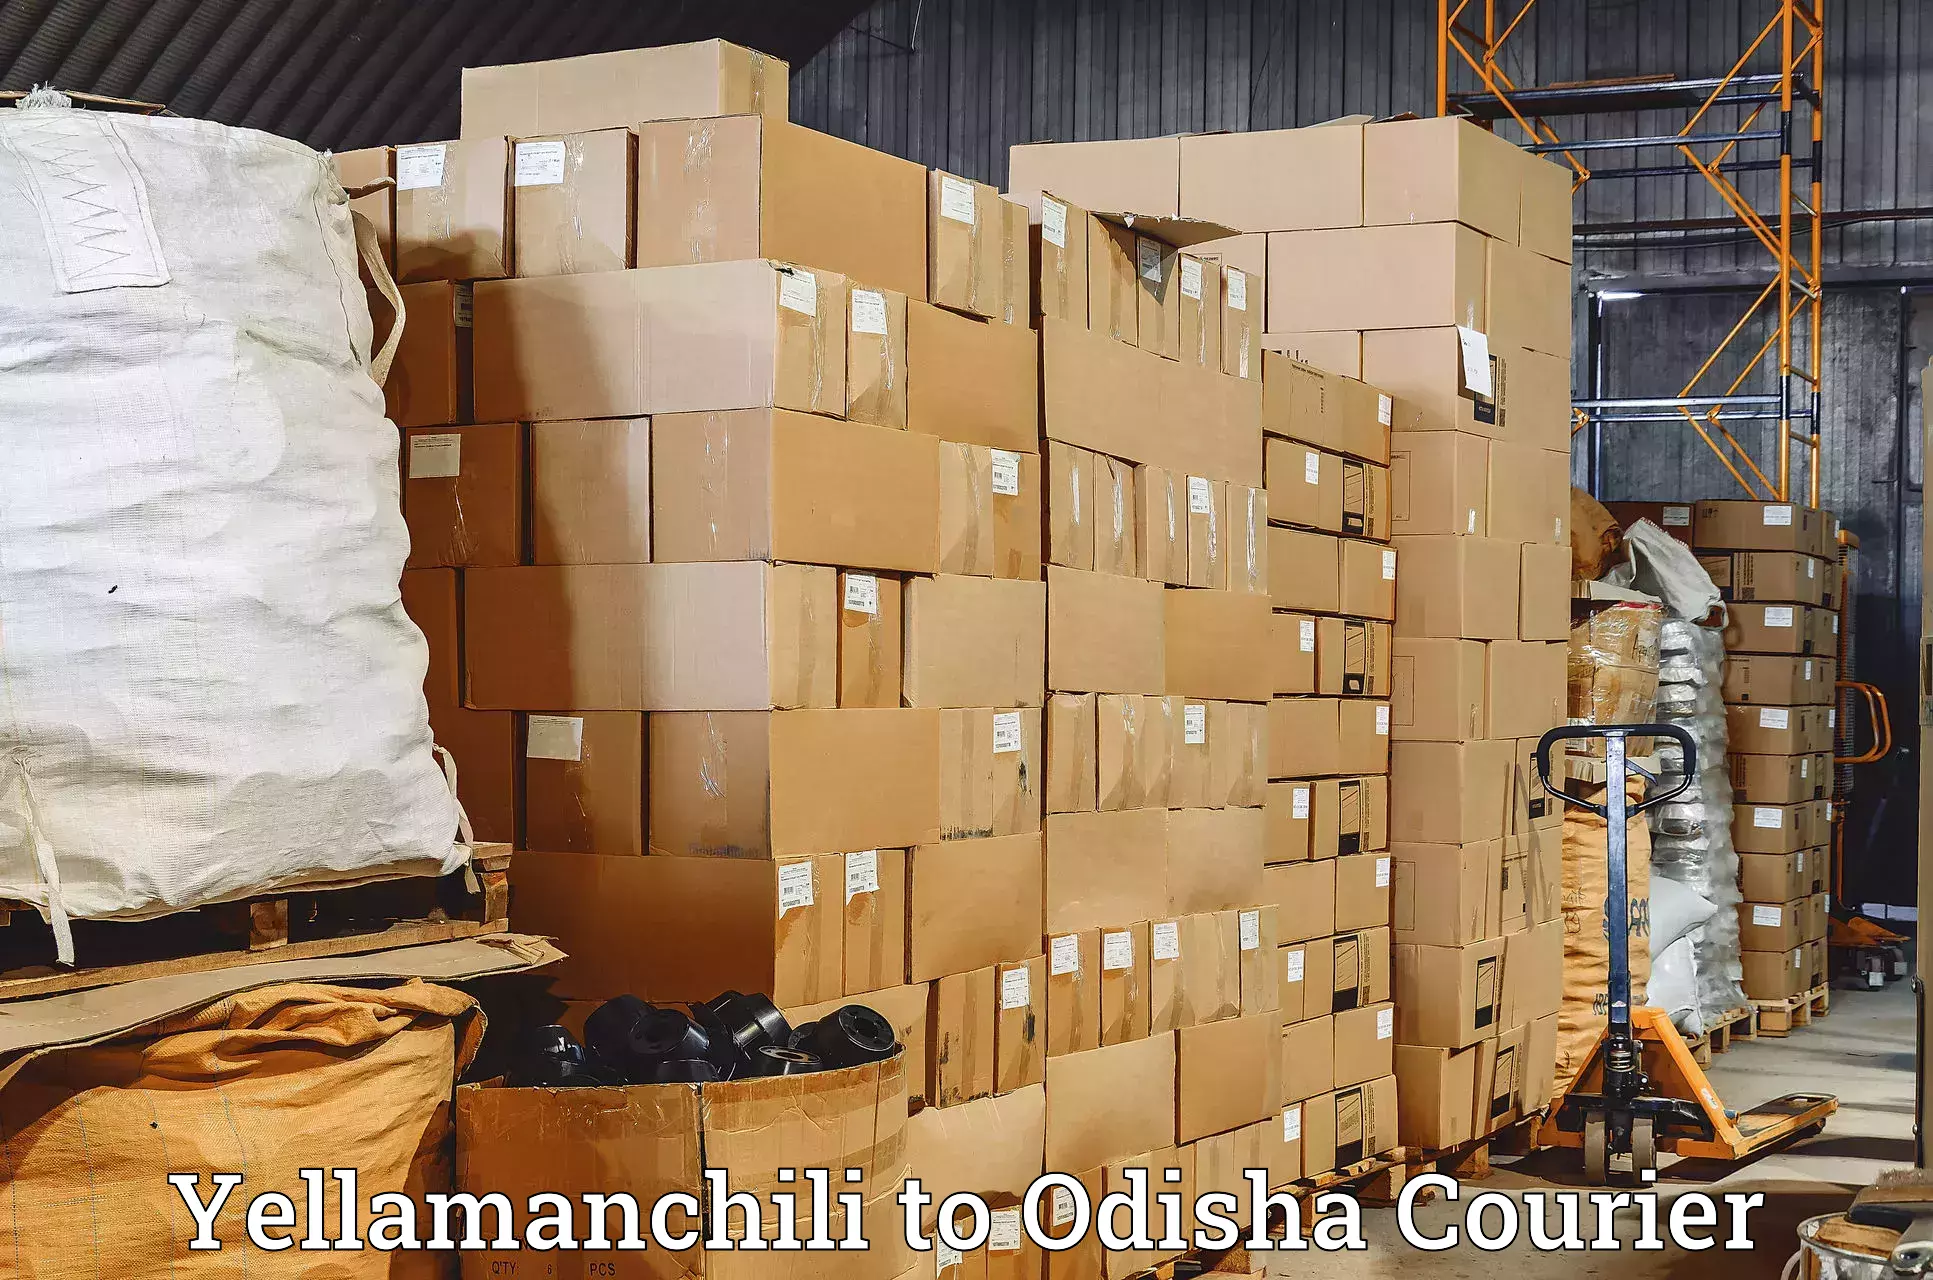 Overnight delivery in Yellamanchili to Dhenkanal